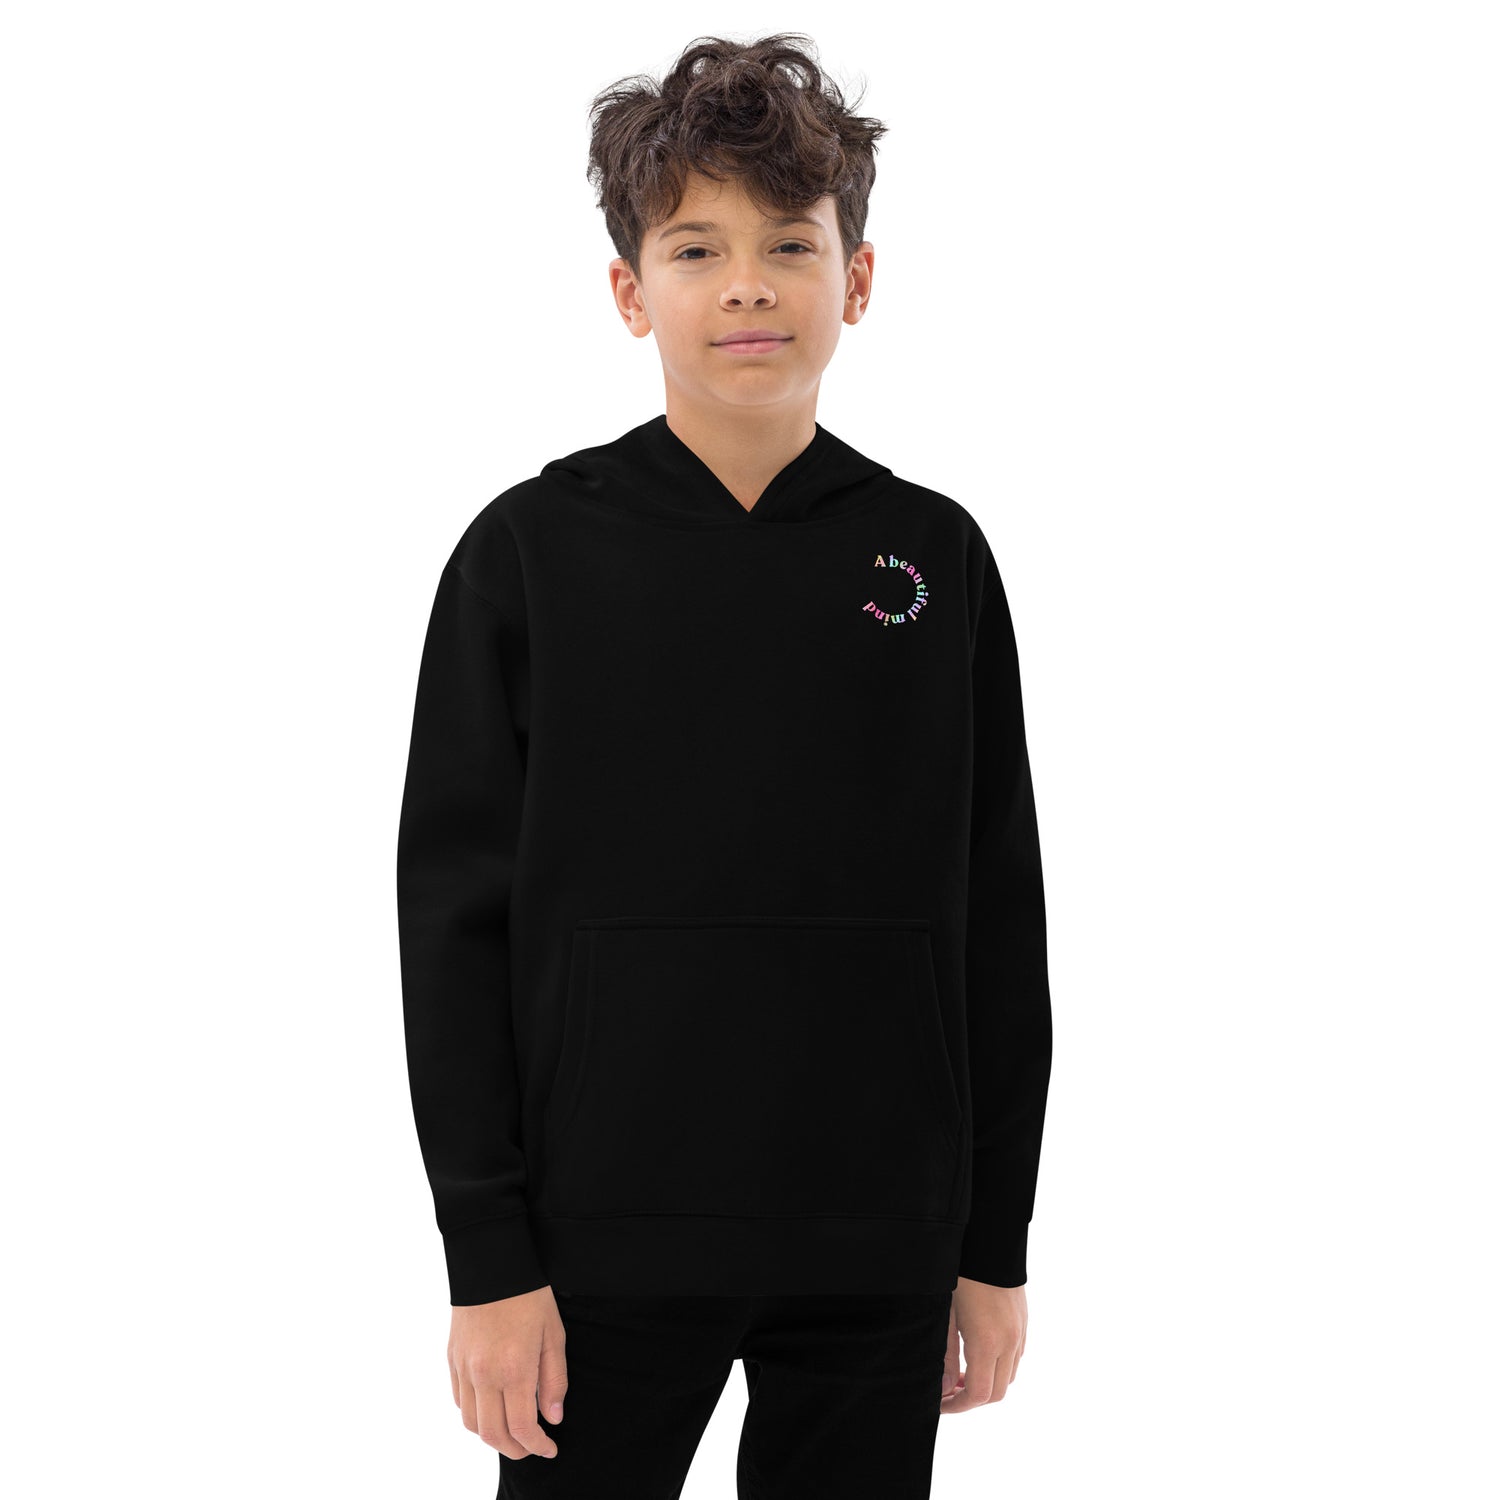 Black Kidswear hoodie  featuring " A beautiful mind" design.